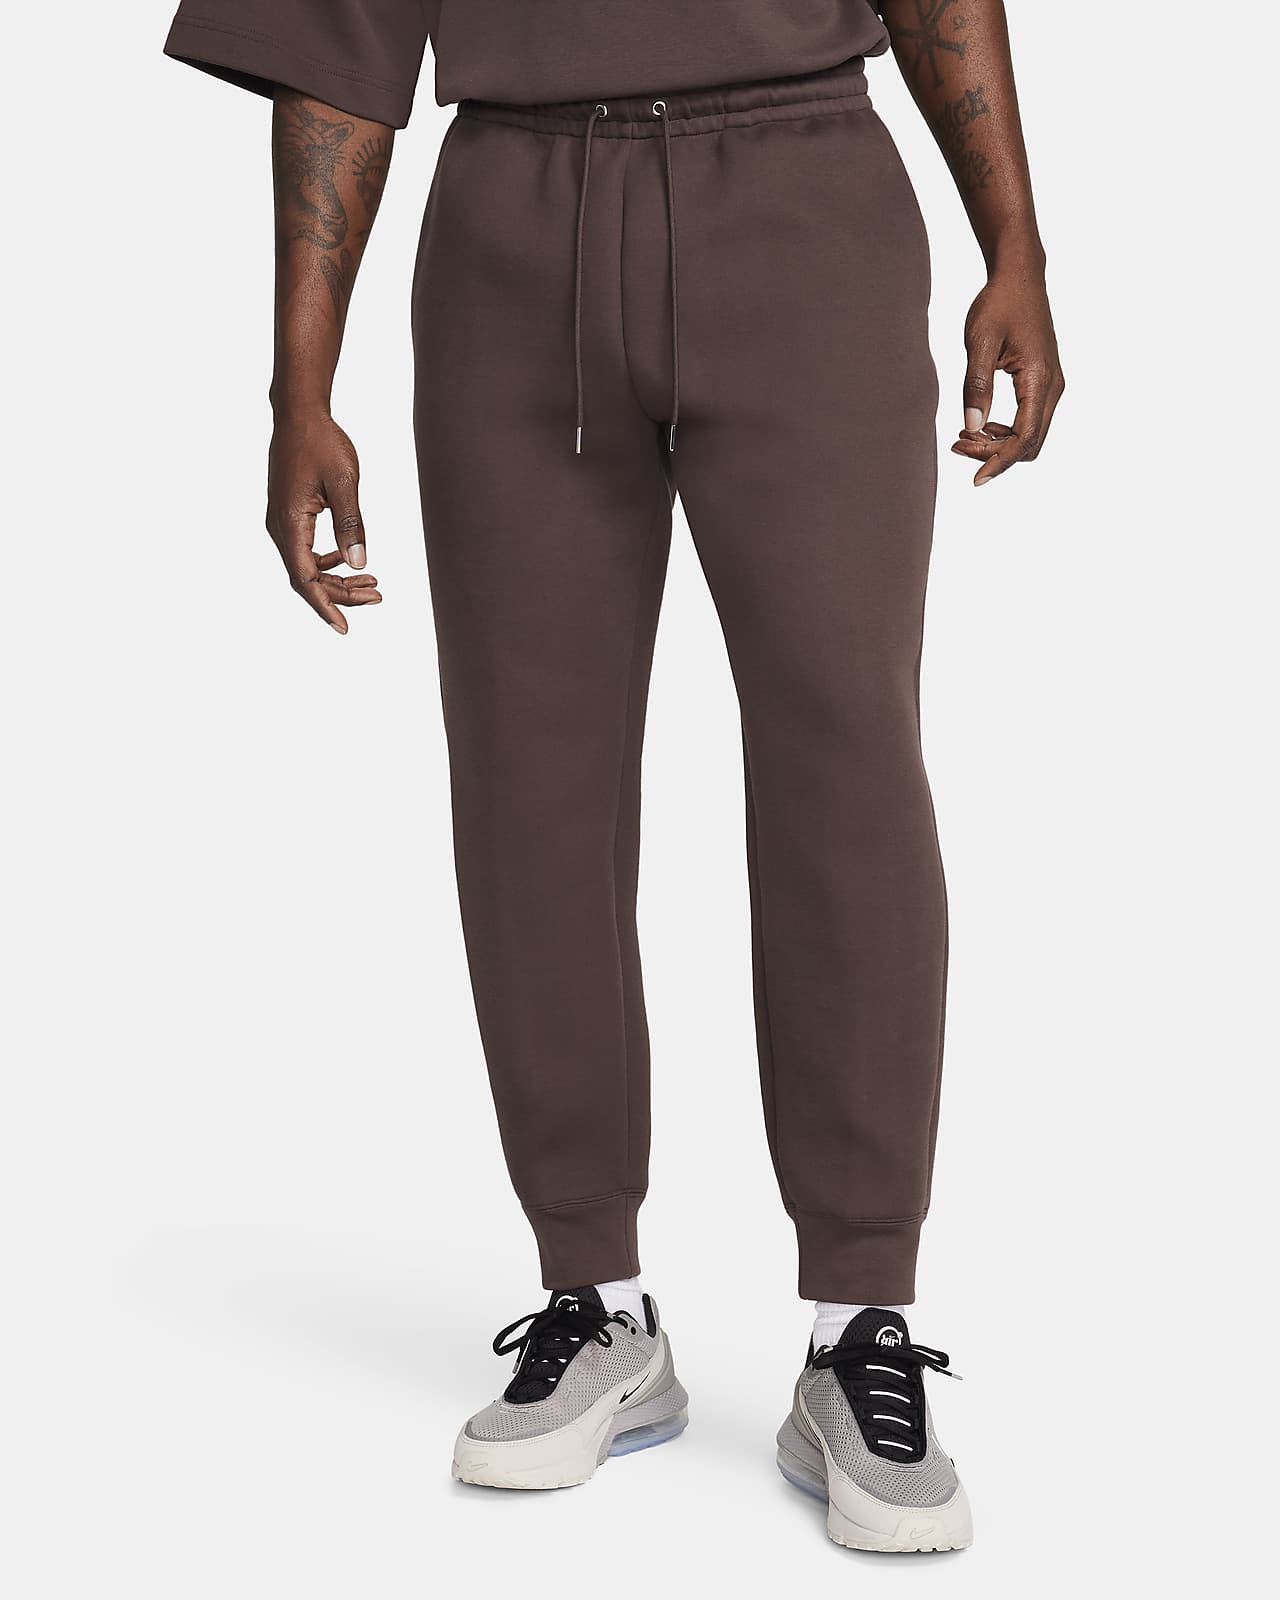 Pants de tejido Fleece para hombre Nike Tech Fleece Reimagined